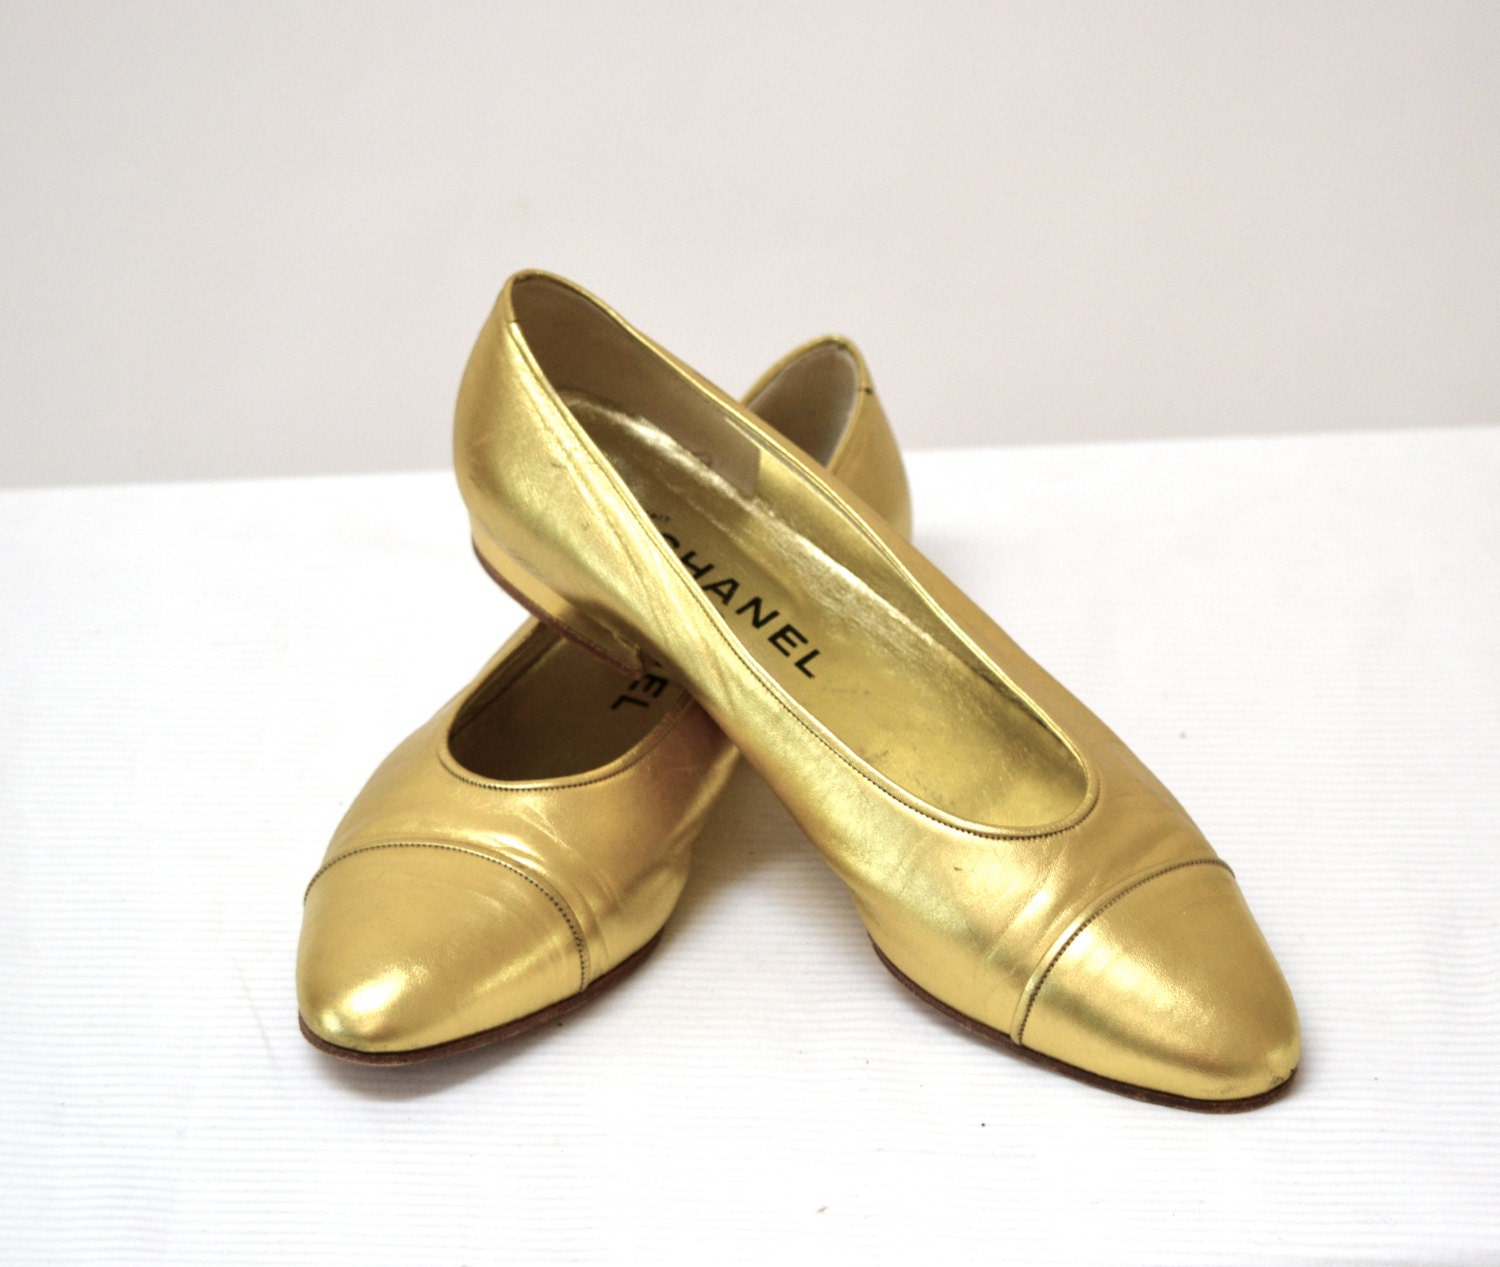 Vintage Chanel Flats size 7 Gold Metallic Ballet by Hookedonhoney